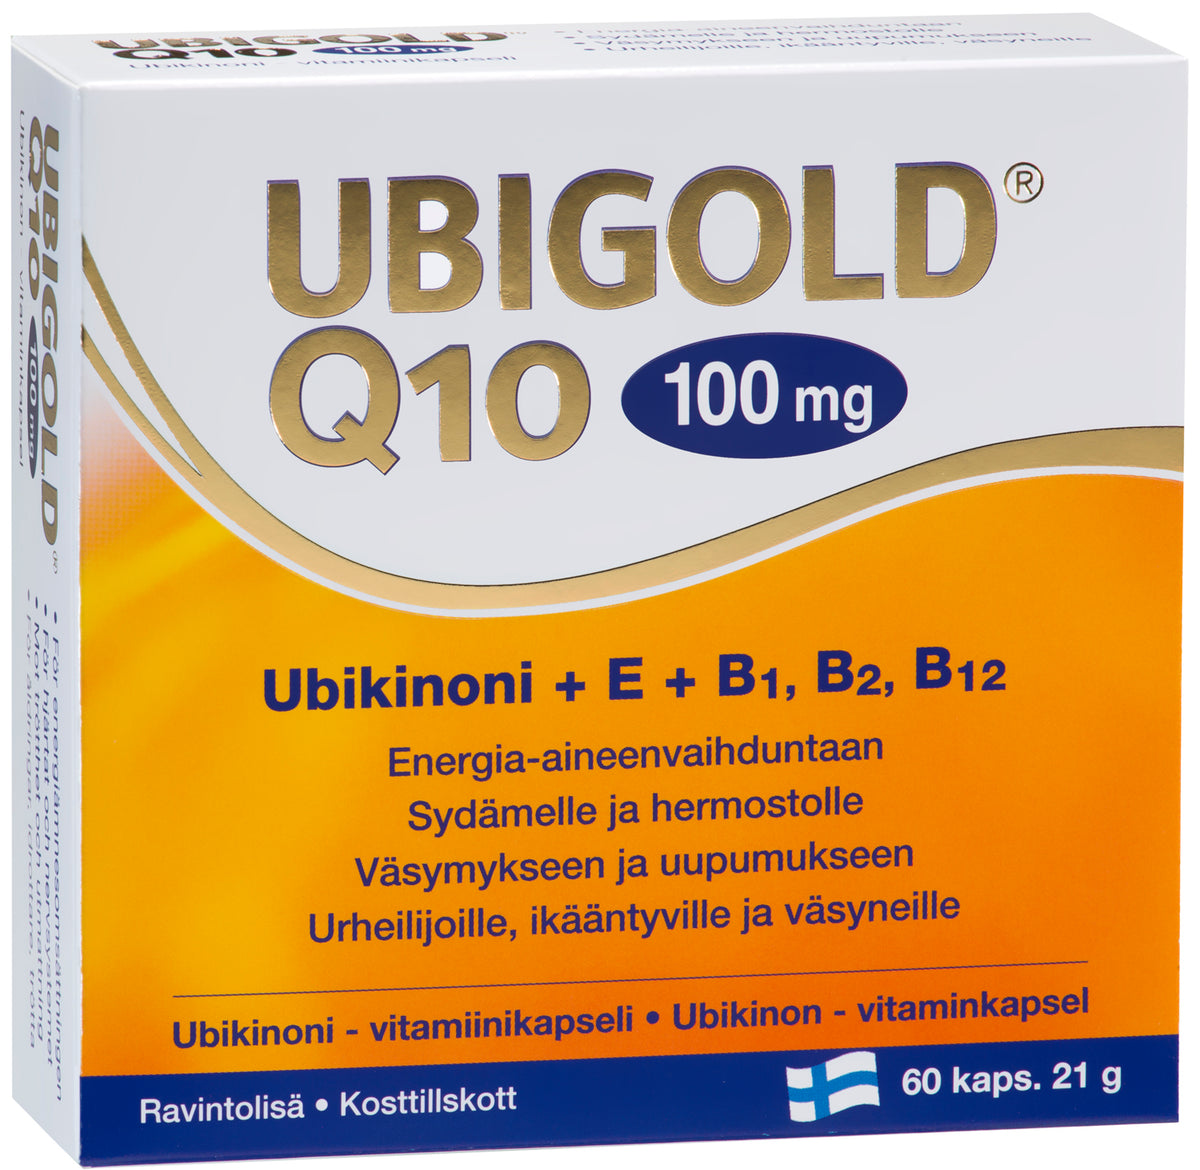 Ubigold Q10 100 mg - Ubikinoni-vitamiinikapseli 60 kaps.